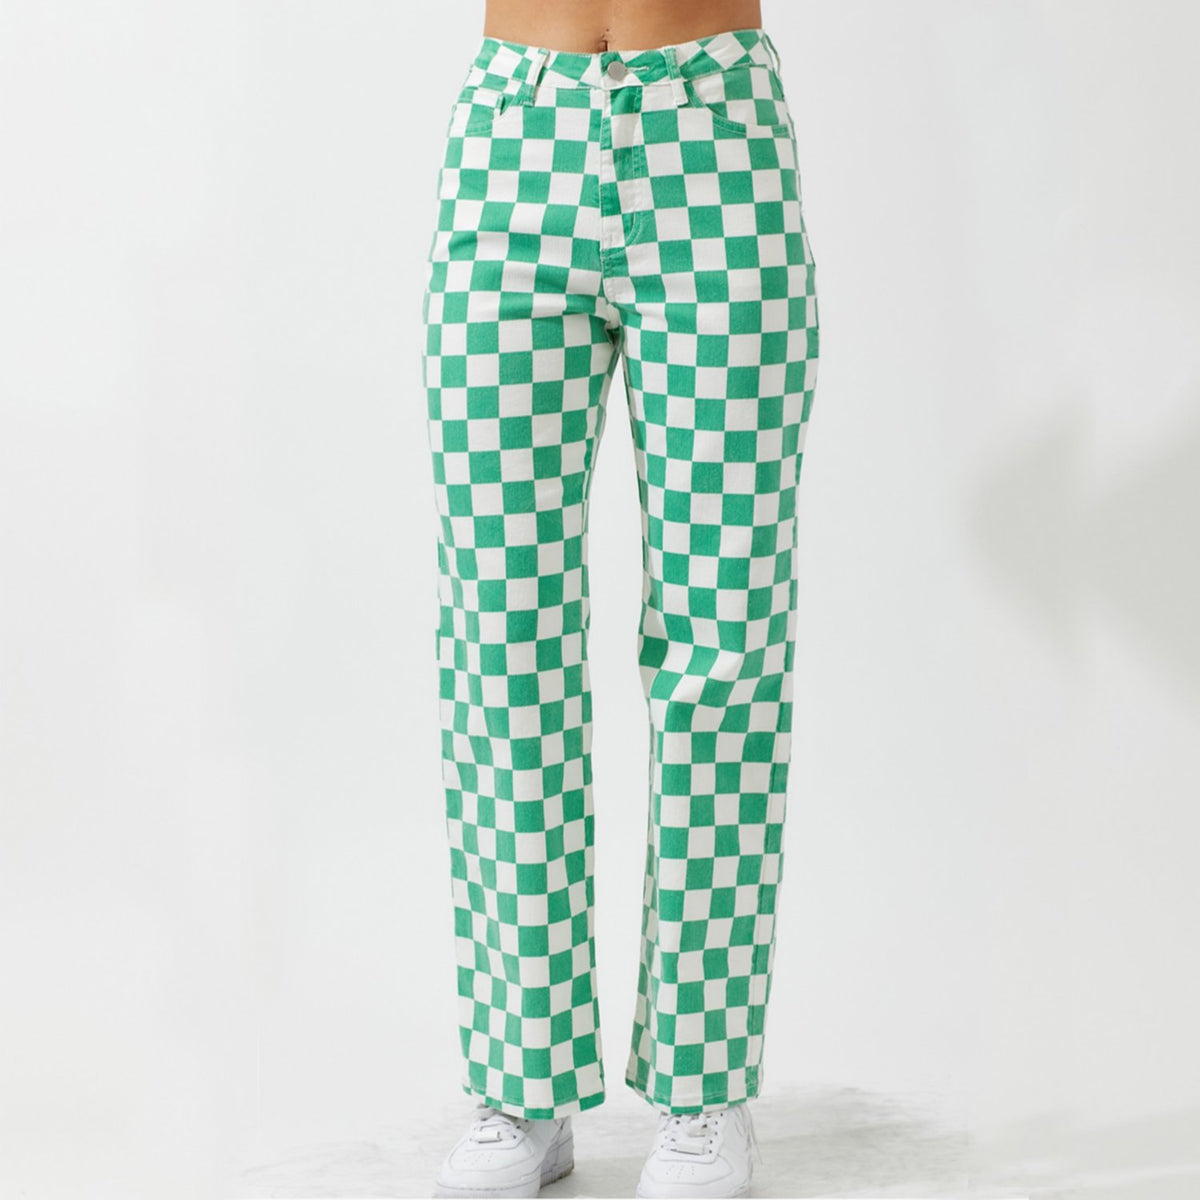 Kelly Green Checkered Pants – Colorful Natalie